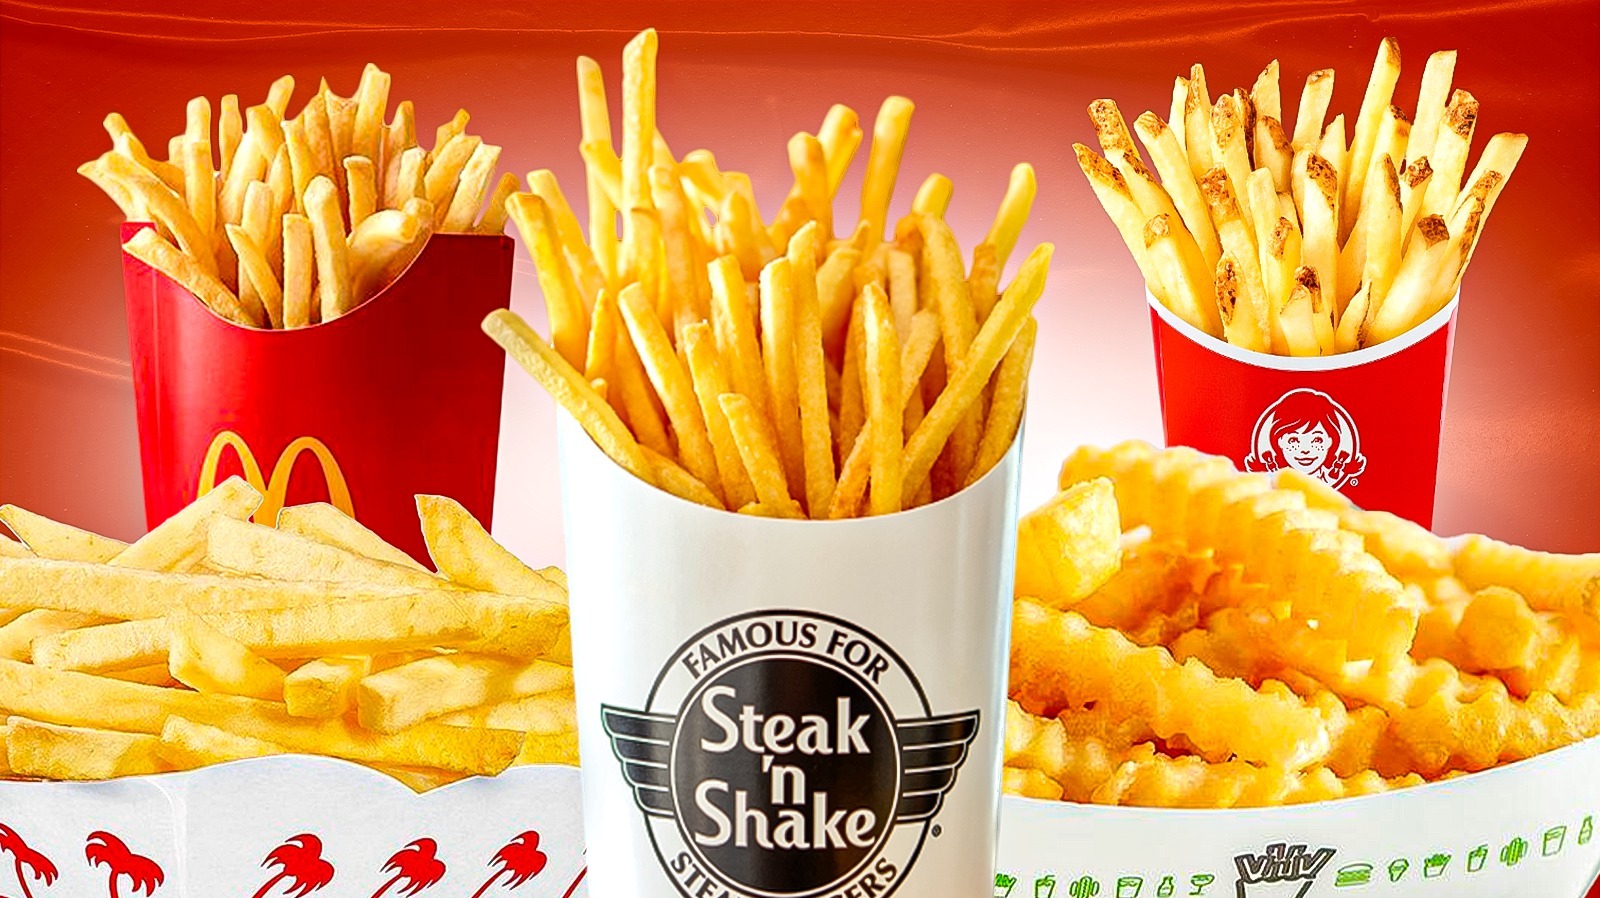 https://www.tastingtable.com/img/gallery/25-fast-food-fries-ranked-worst-to-best/l-intro-1683307183.jpg